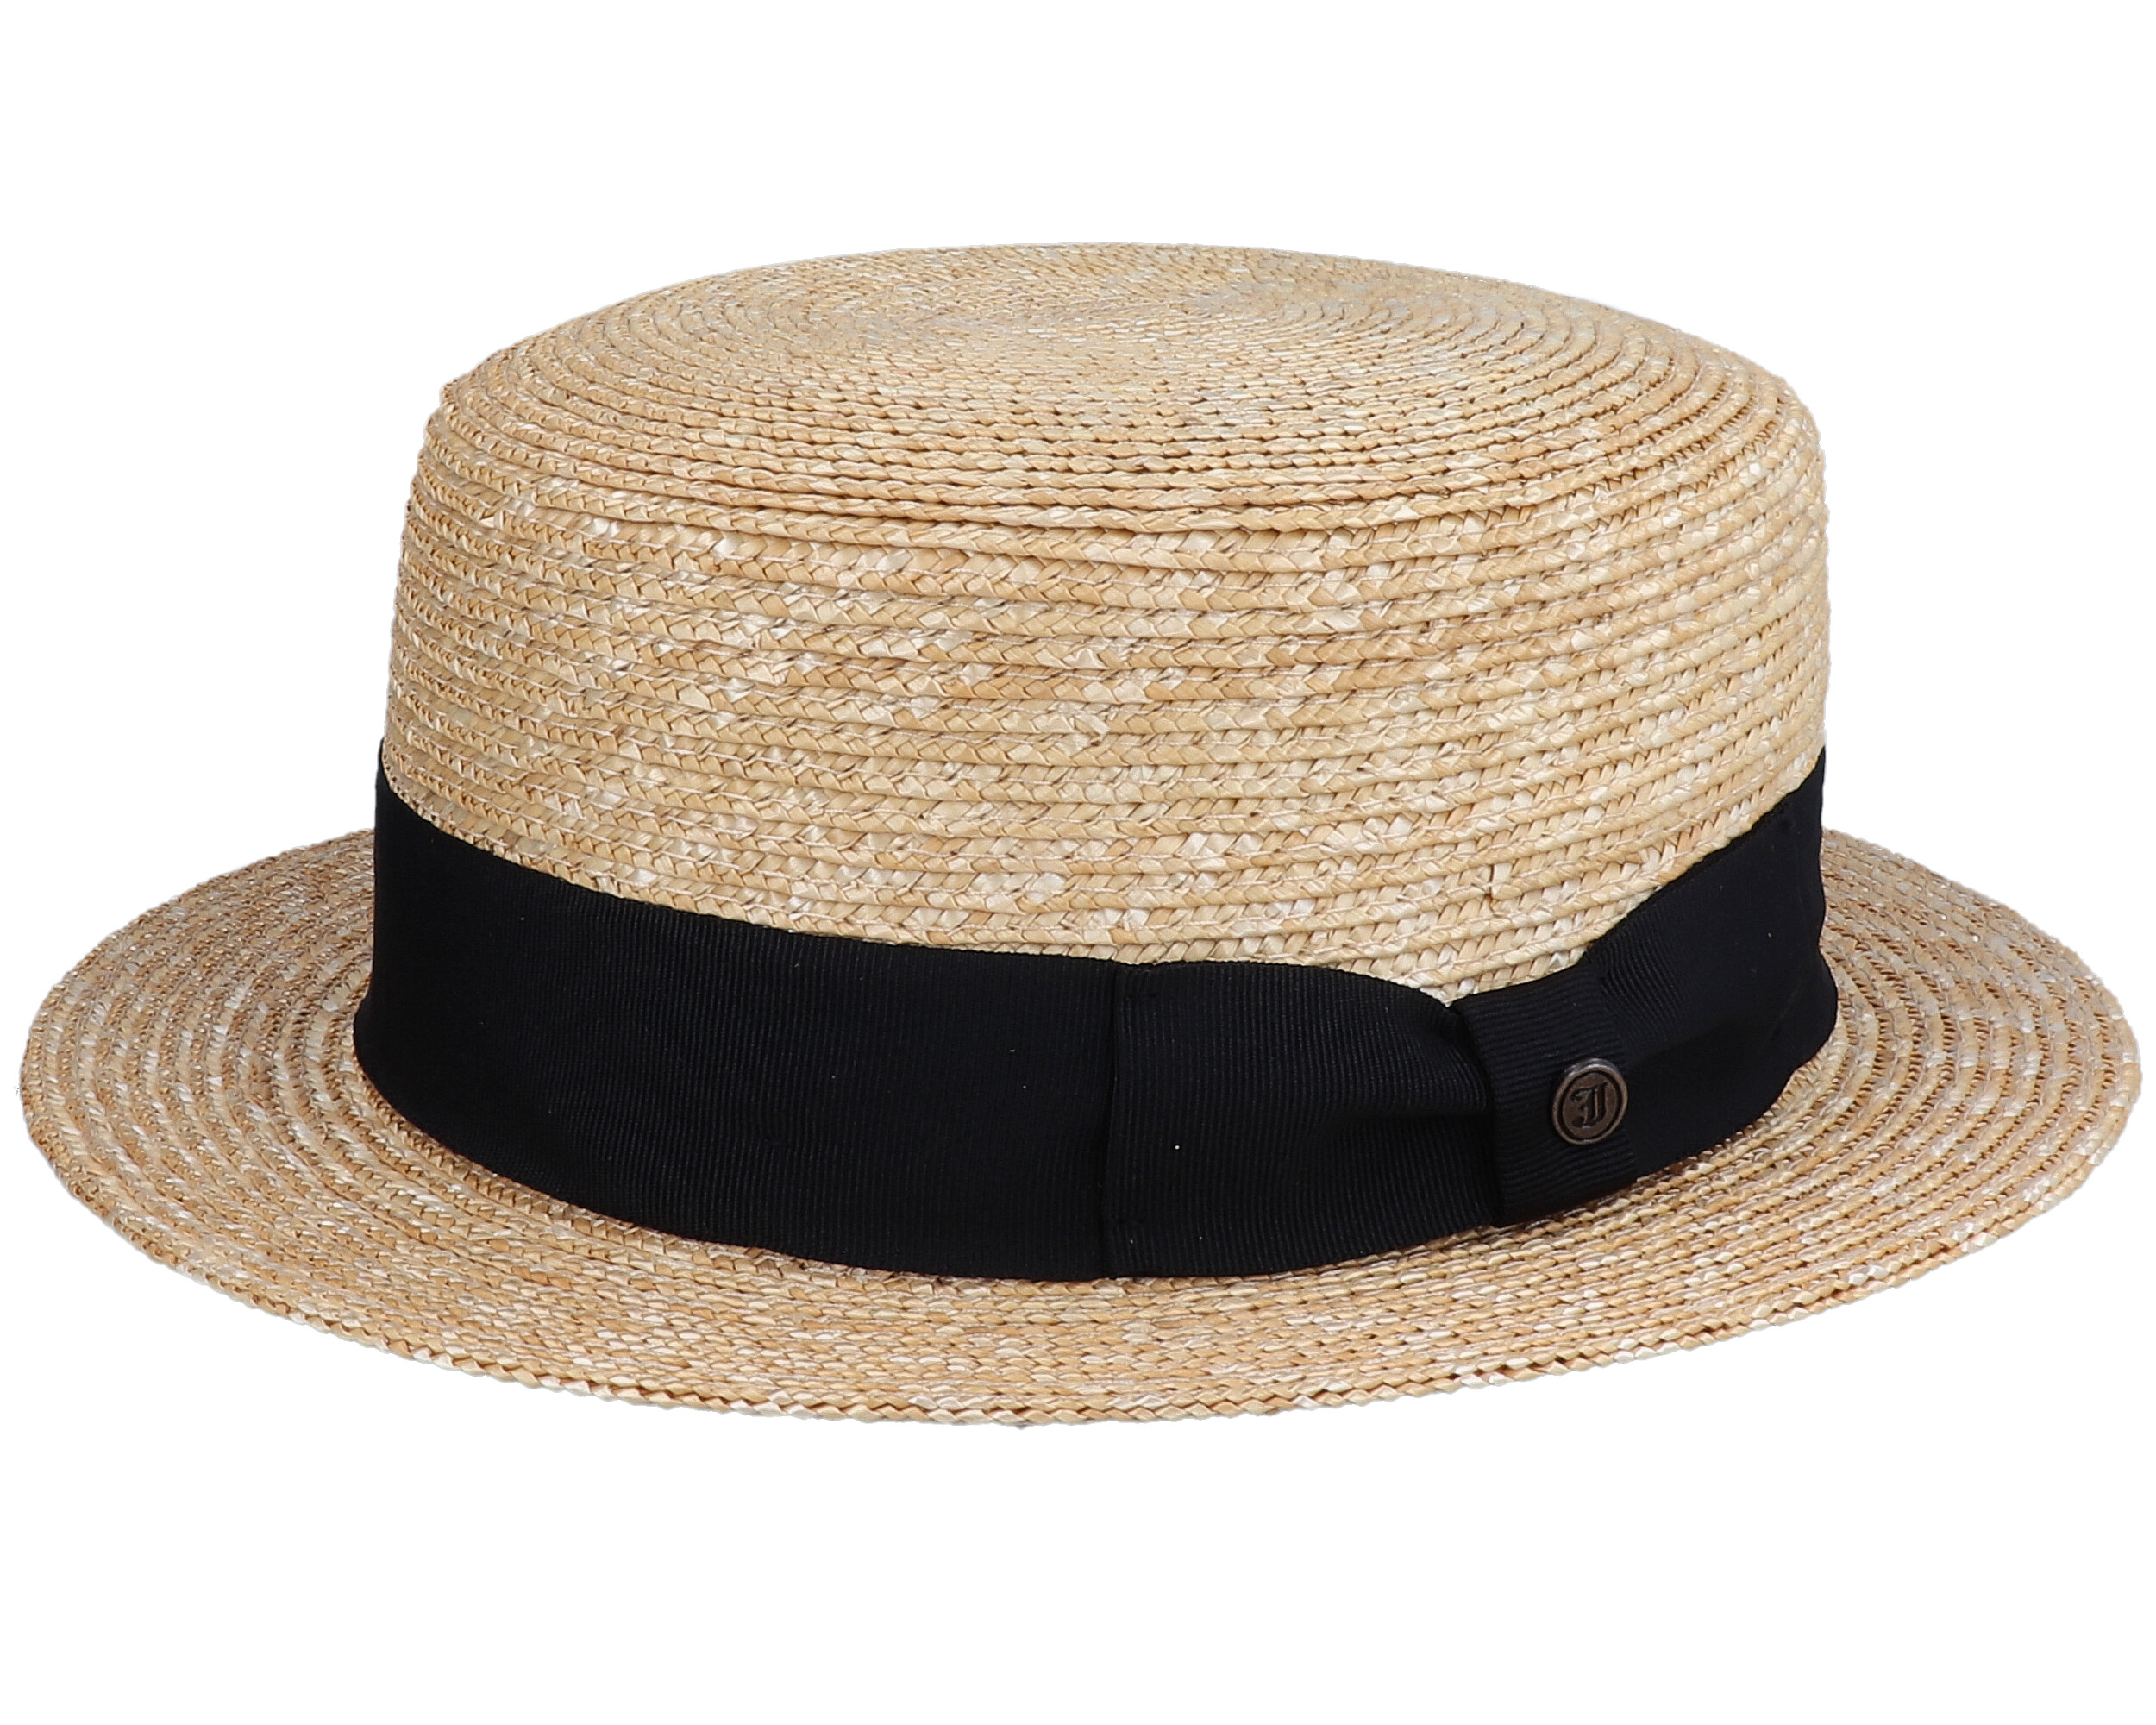 Boater Hat Beige/Black Straw Hat - Jaxon & James hats - Hatstoreworld.com